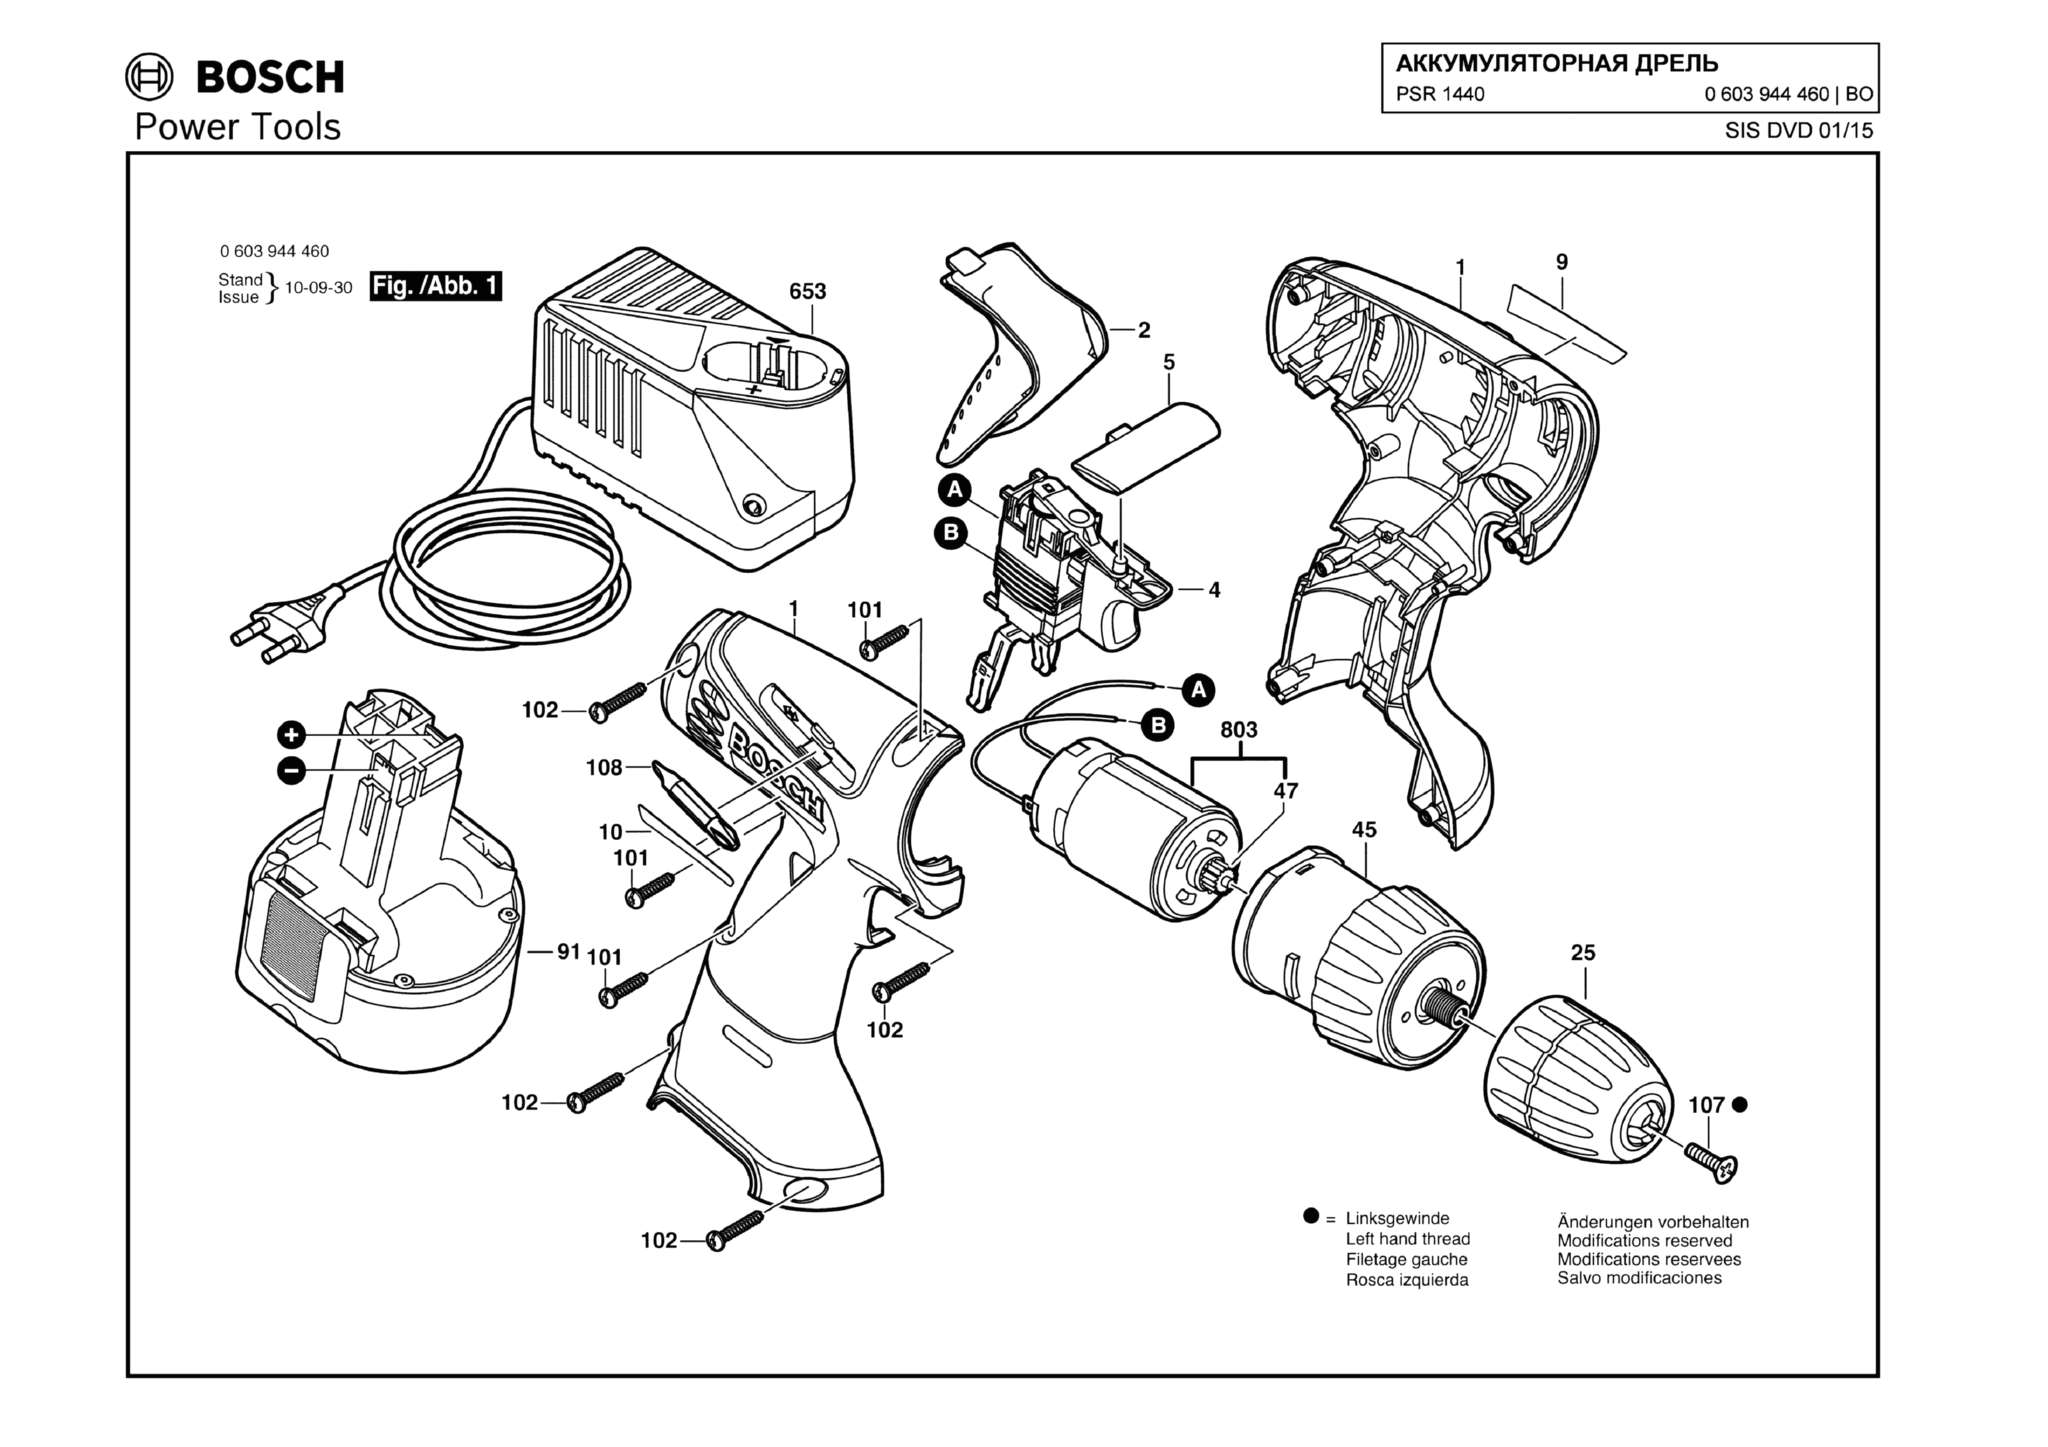 Запчасти, схема и деталировка Bosch PSR 1440 (ТИП 0603944460)